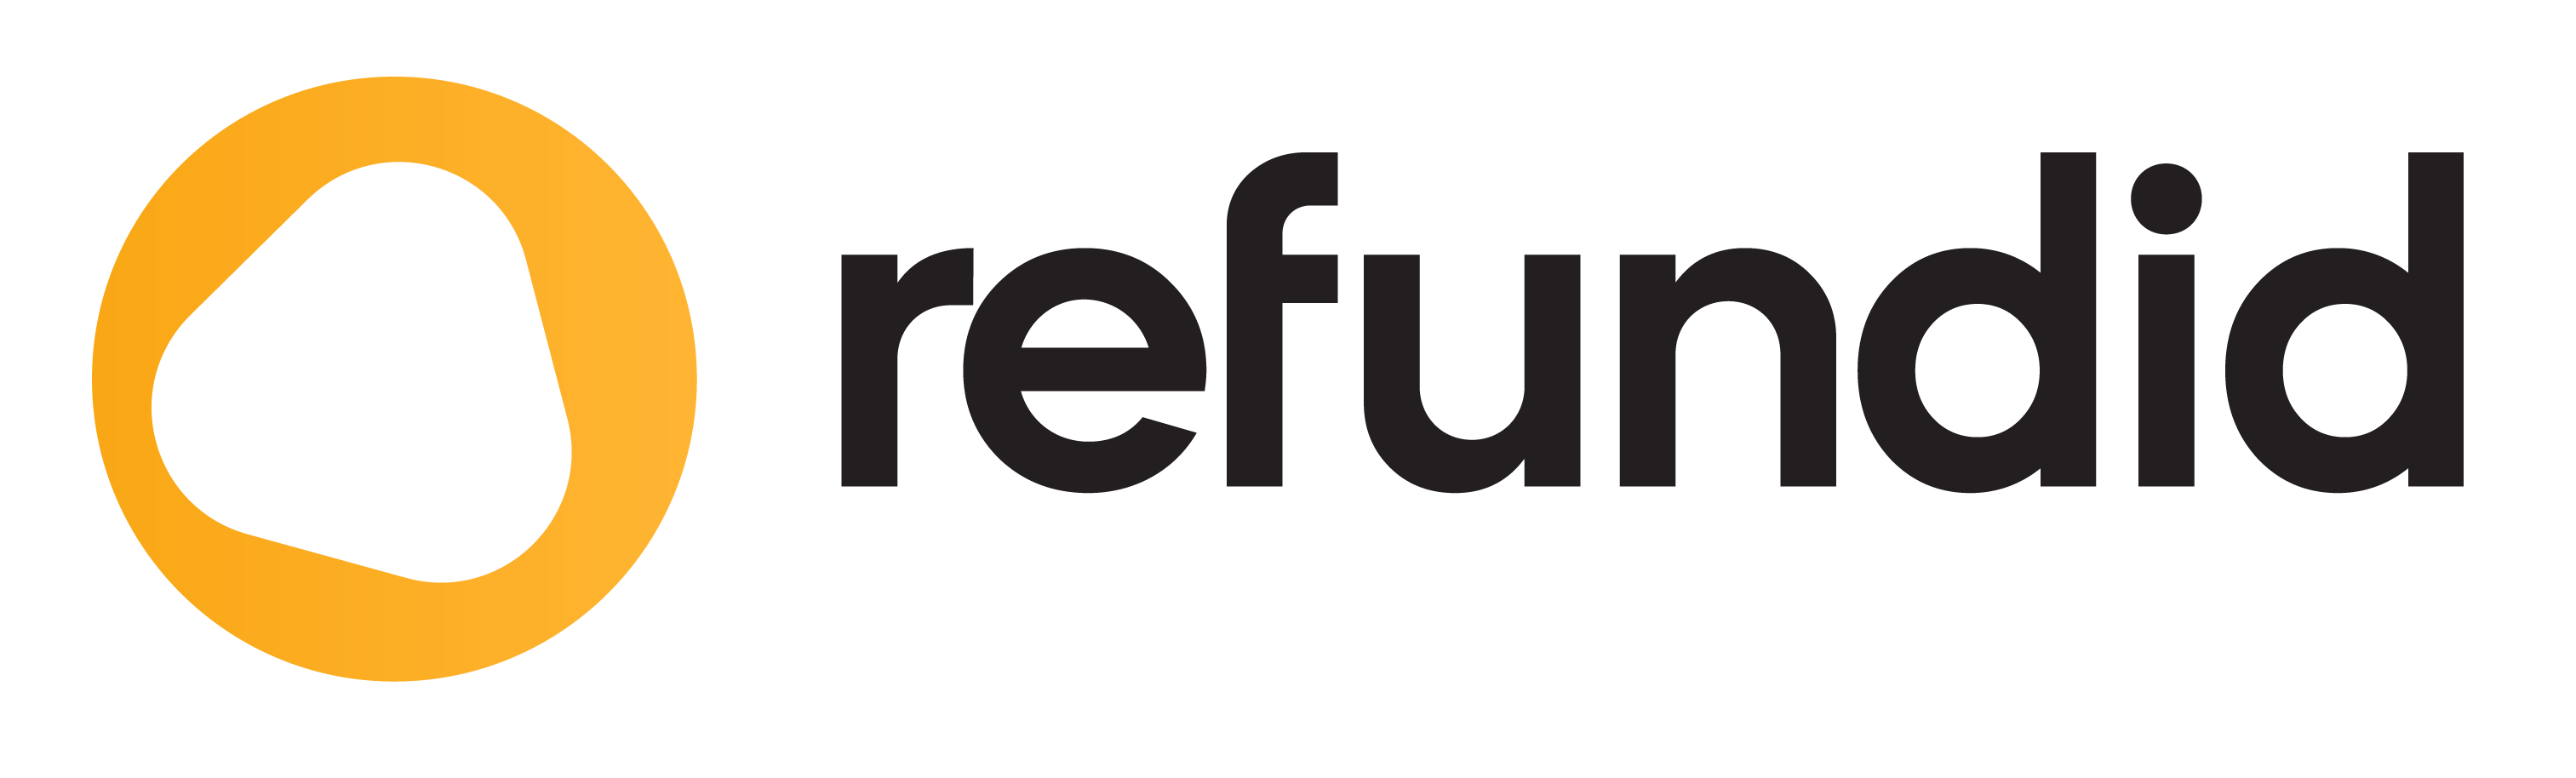 Refundid logo